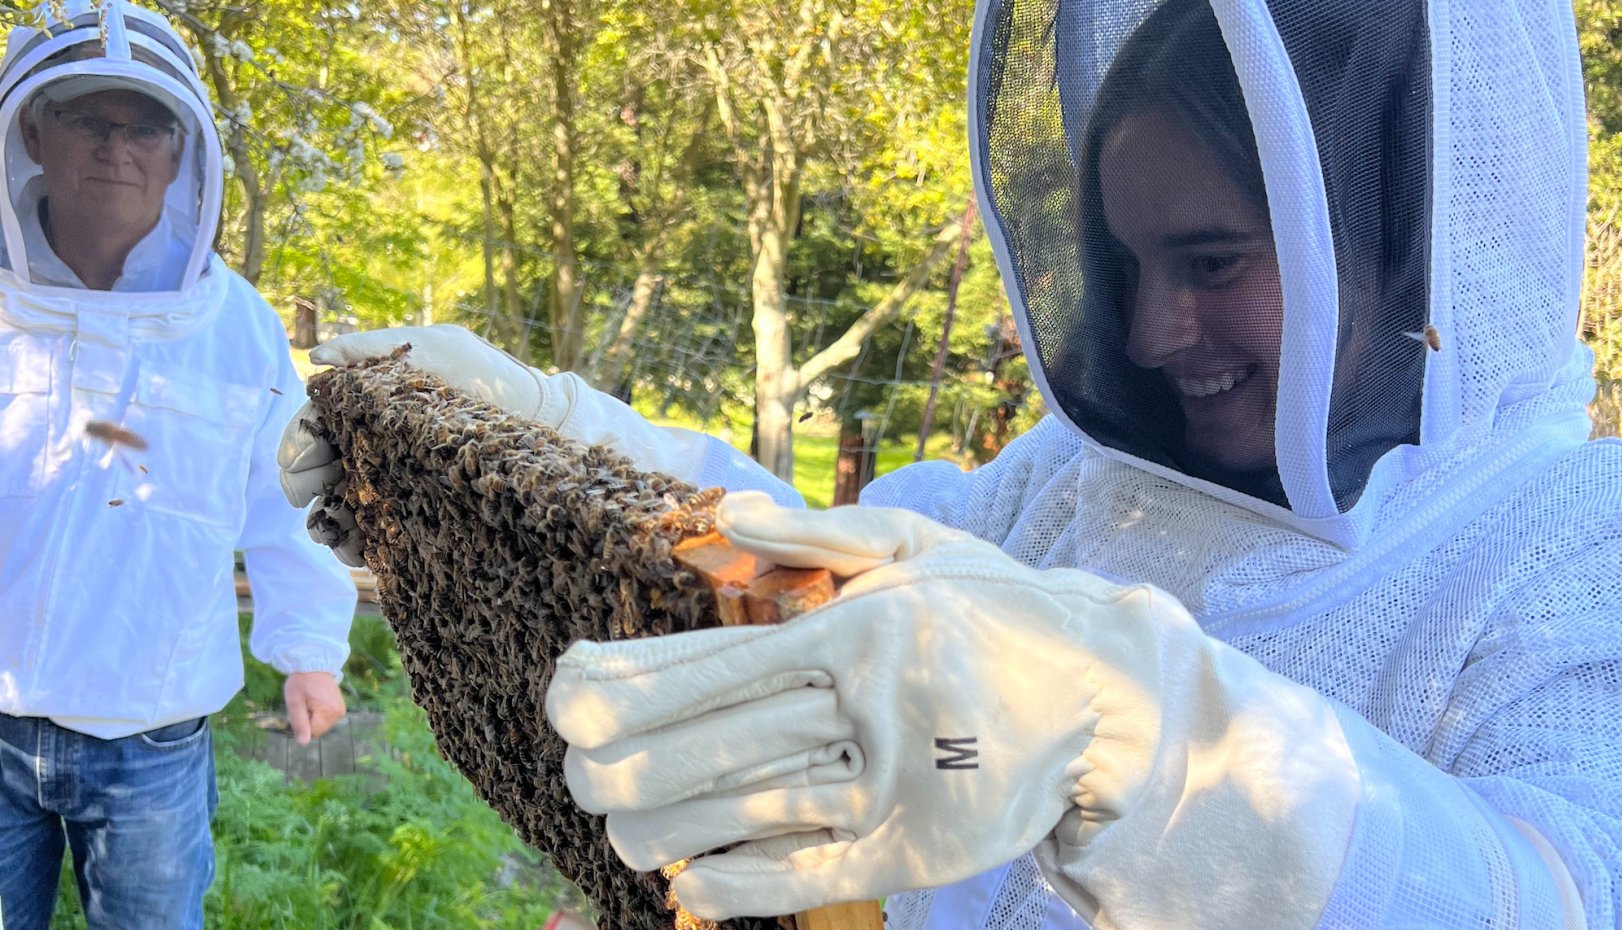 Female student Hathaway Scarping holding honeycomb